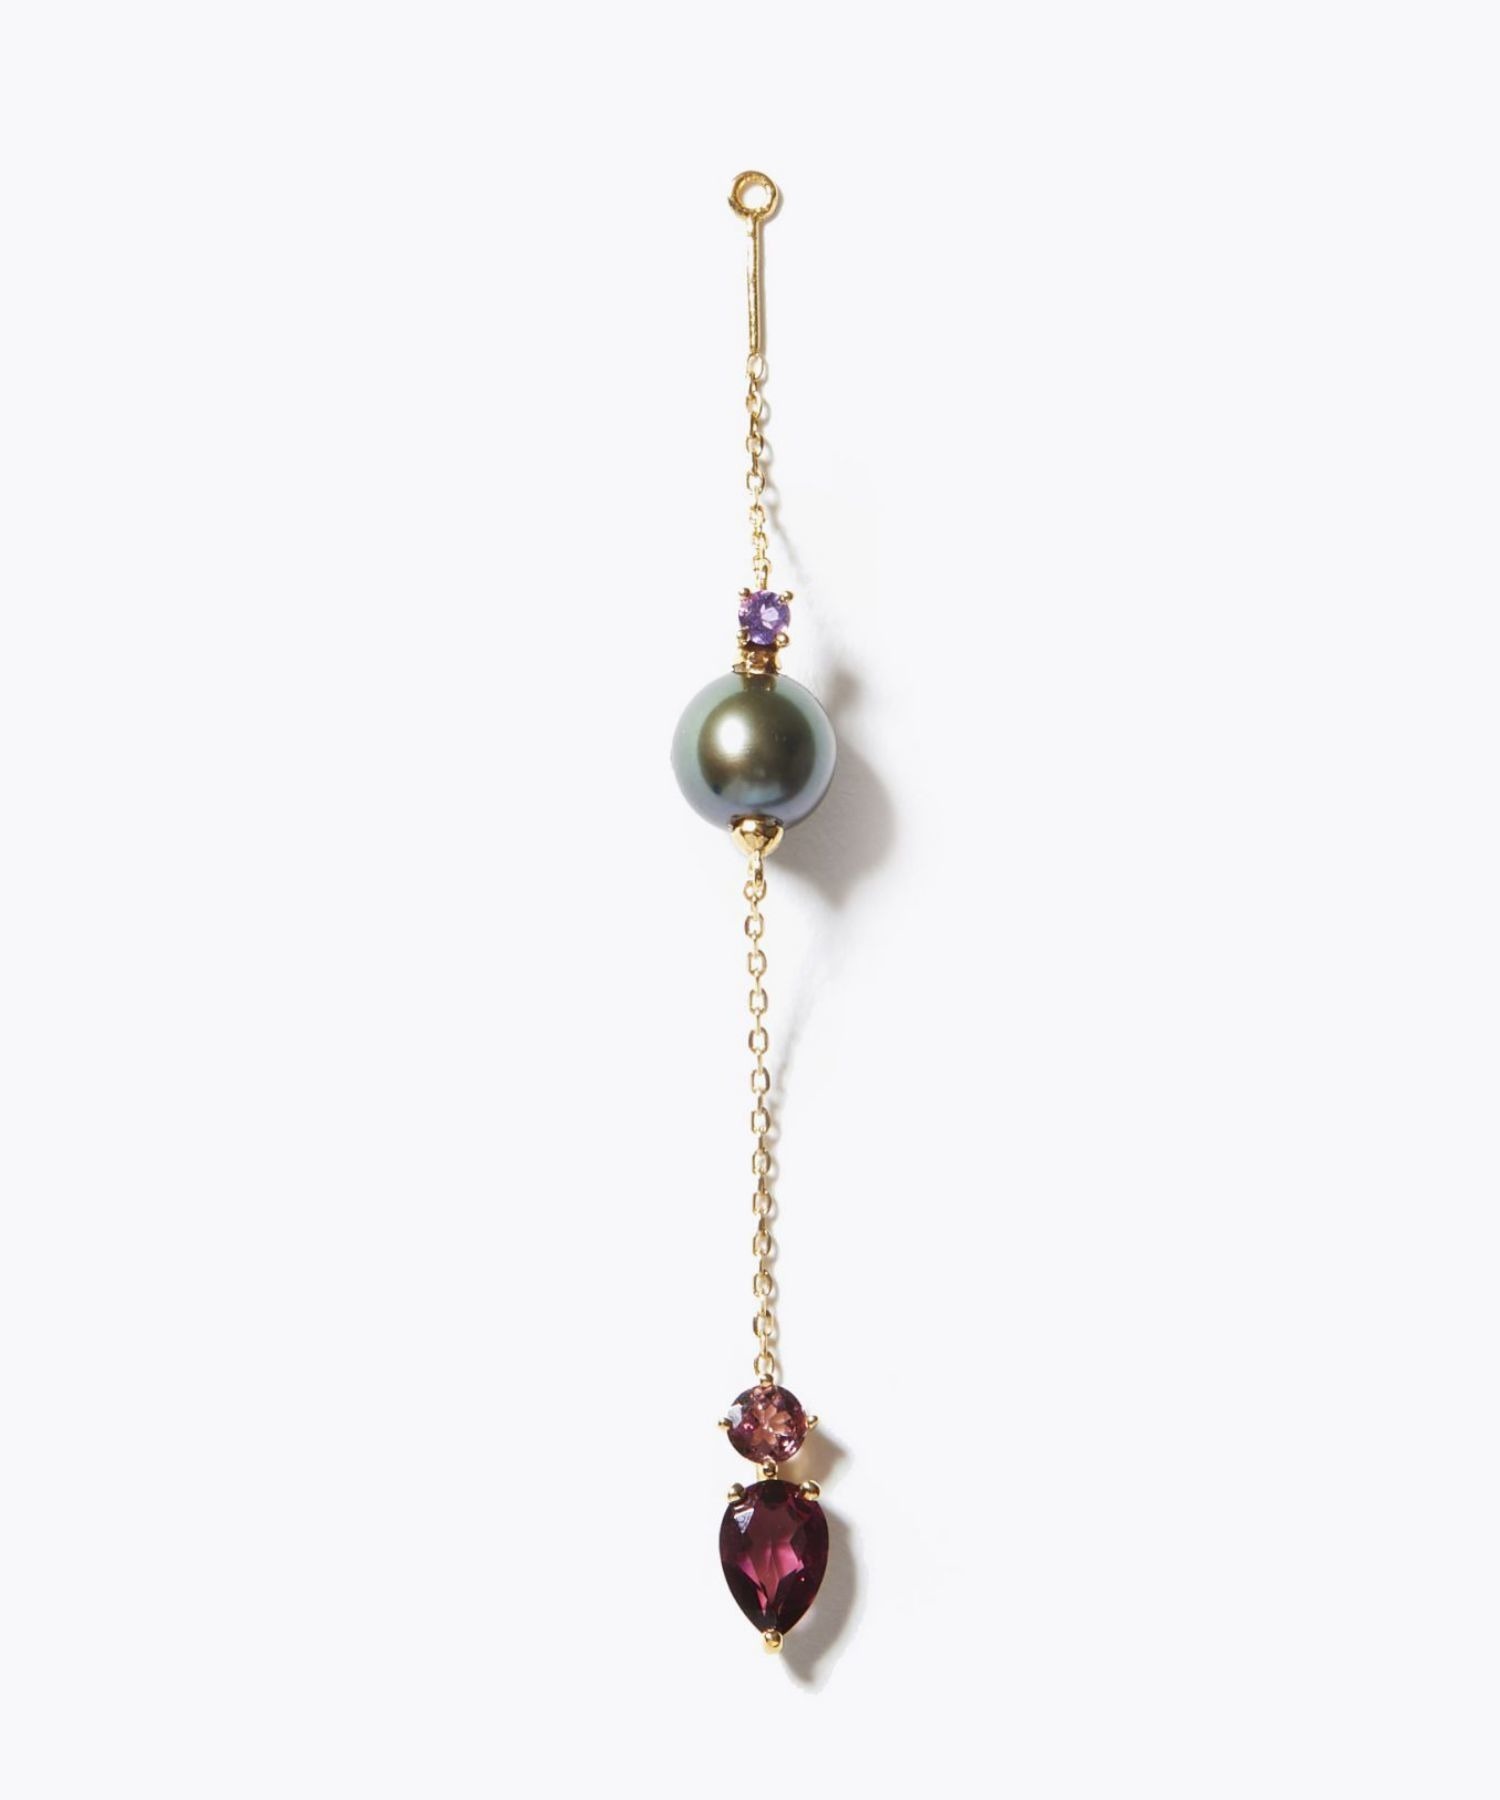 [eden] K10 tahiti pearl pink tourmaline rhodolite chain ear charm